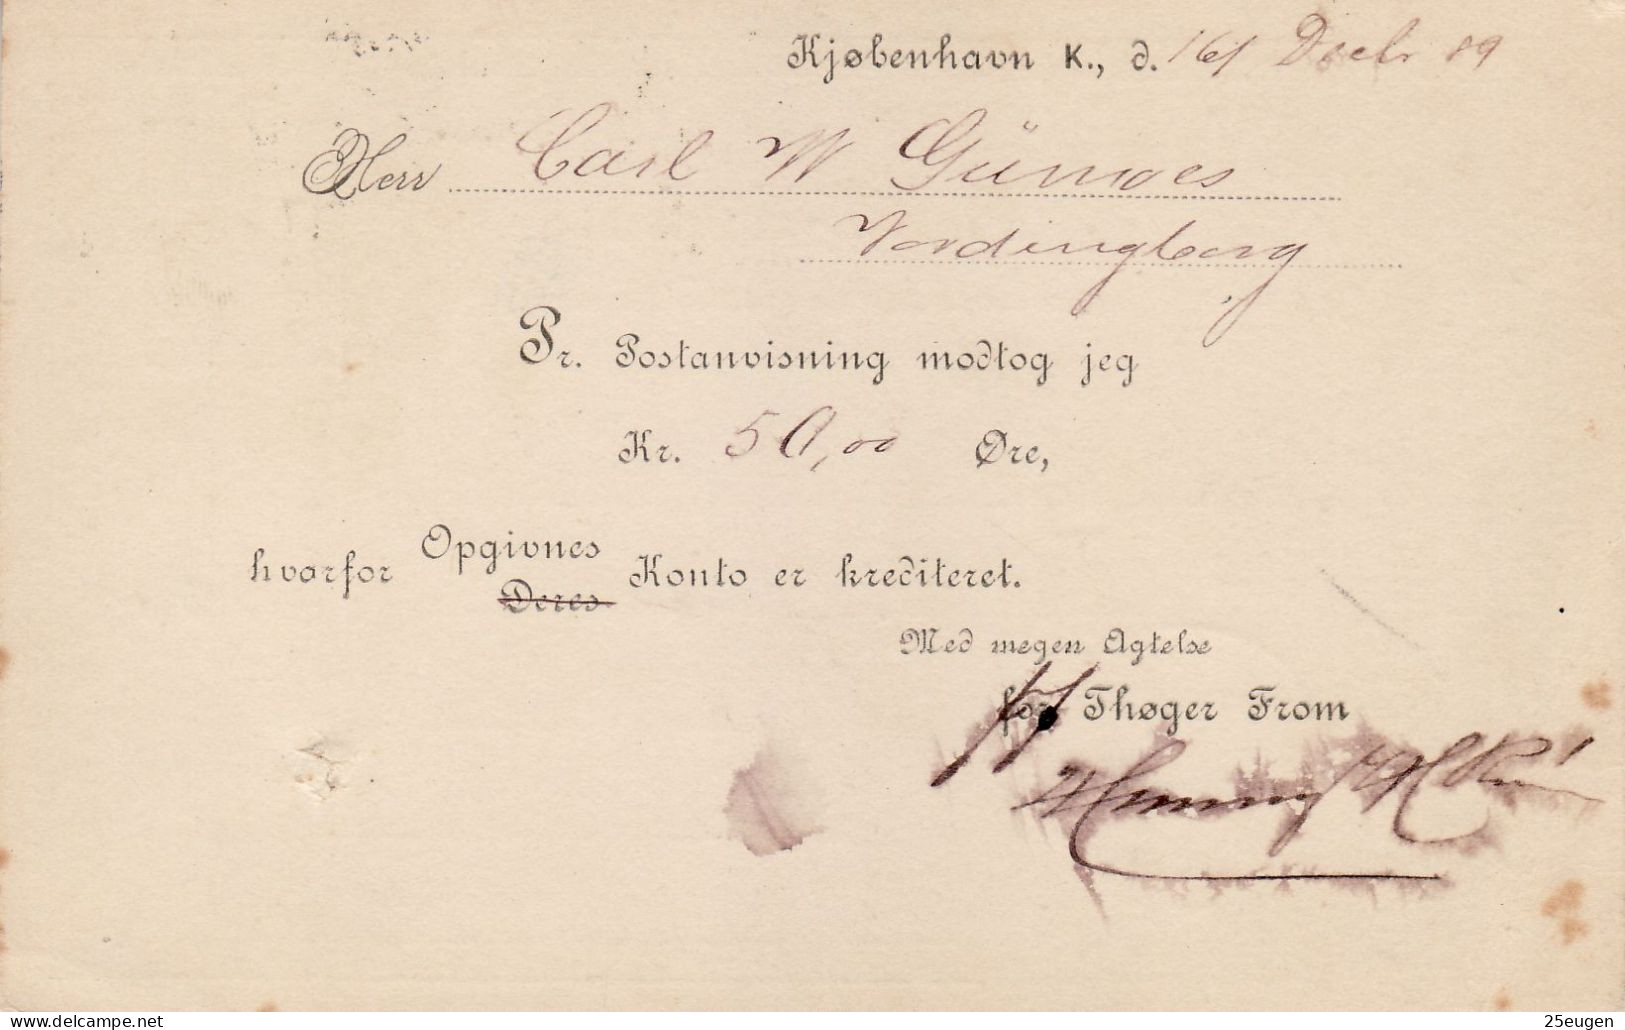 DENMARK 1889 POSTCARD MiNr P 28 II B SENT FROM KOBENHAVN TO VORDINGBORG - Postal Stationery